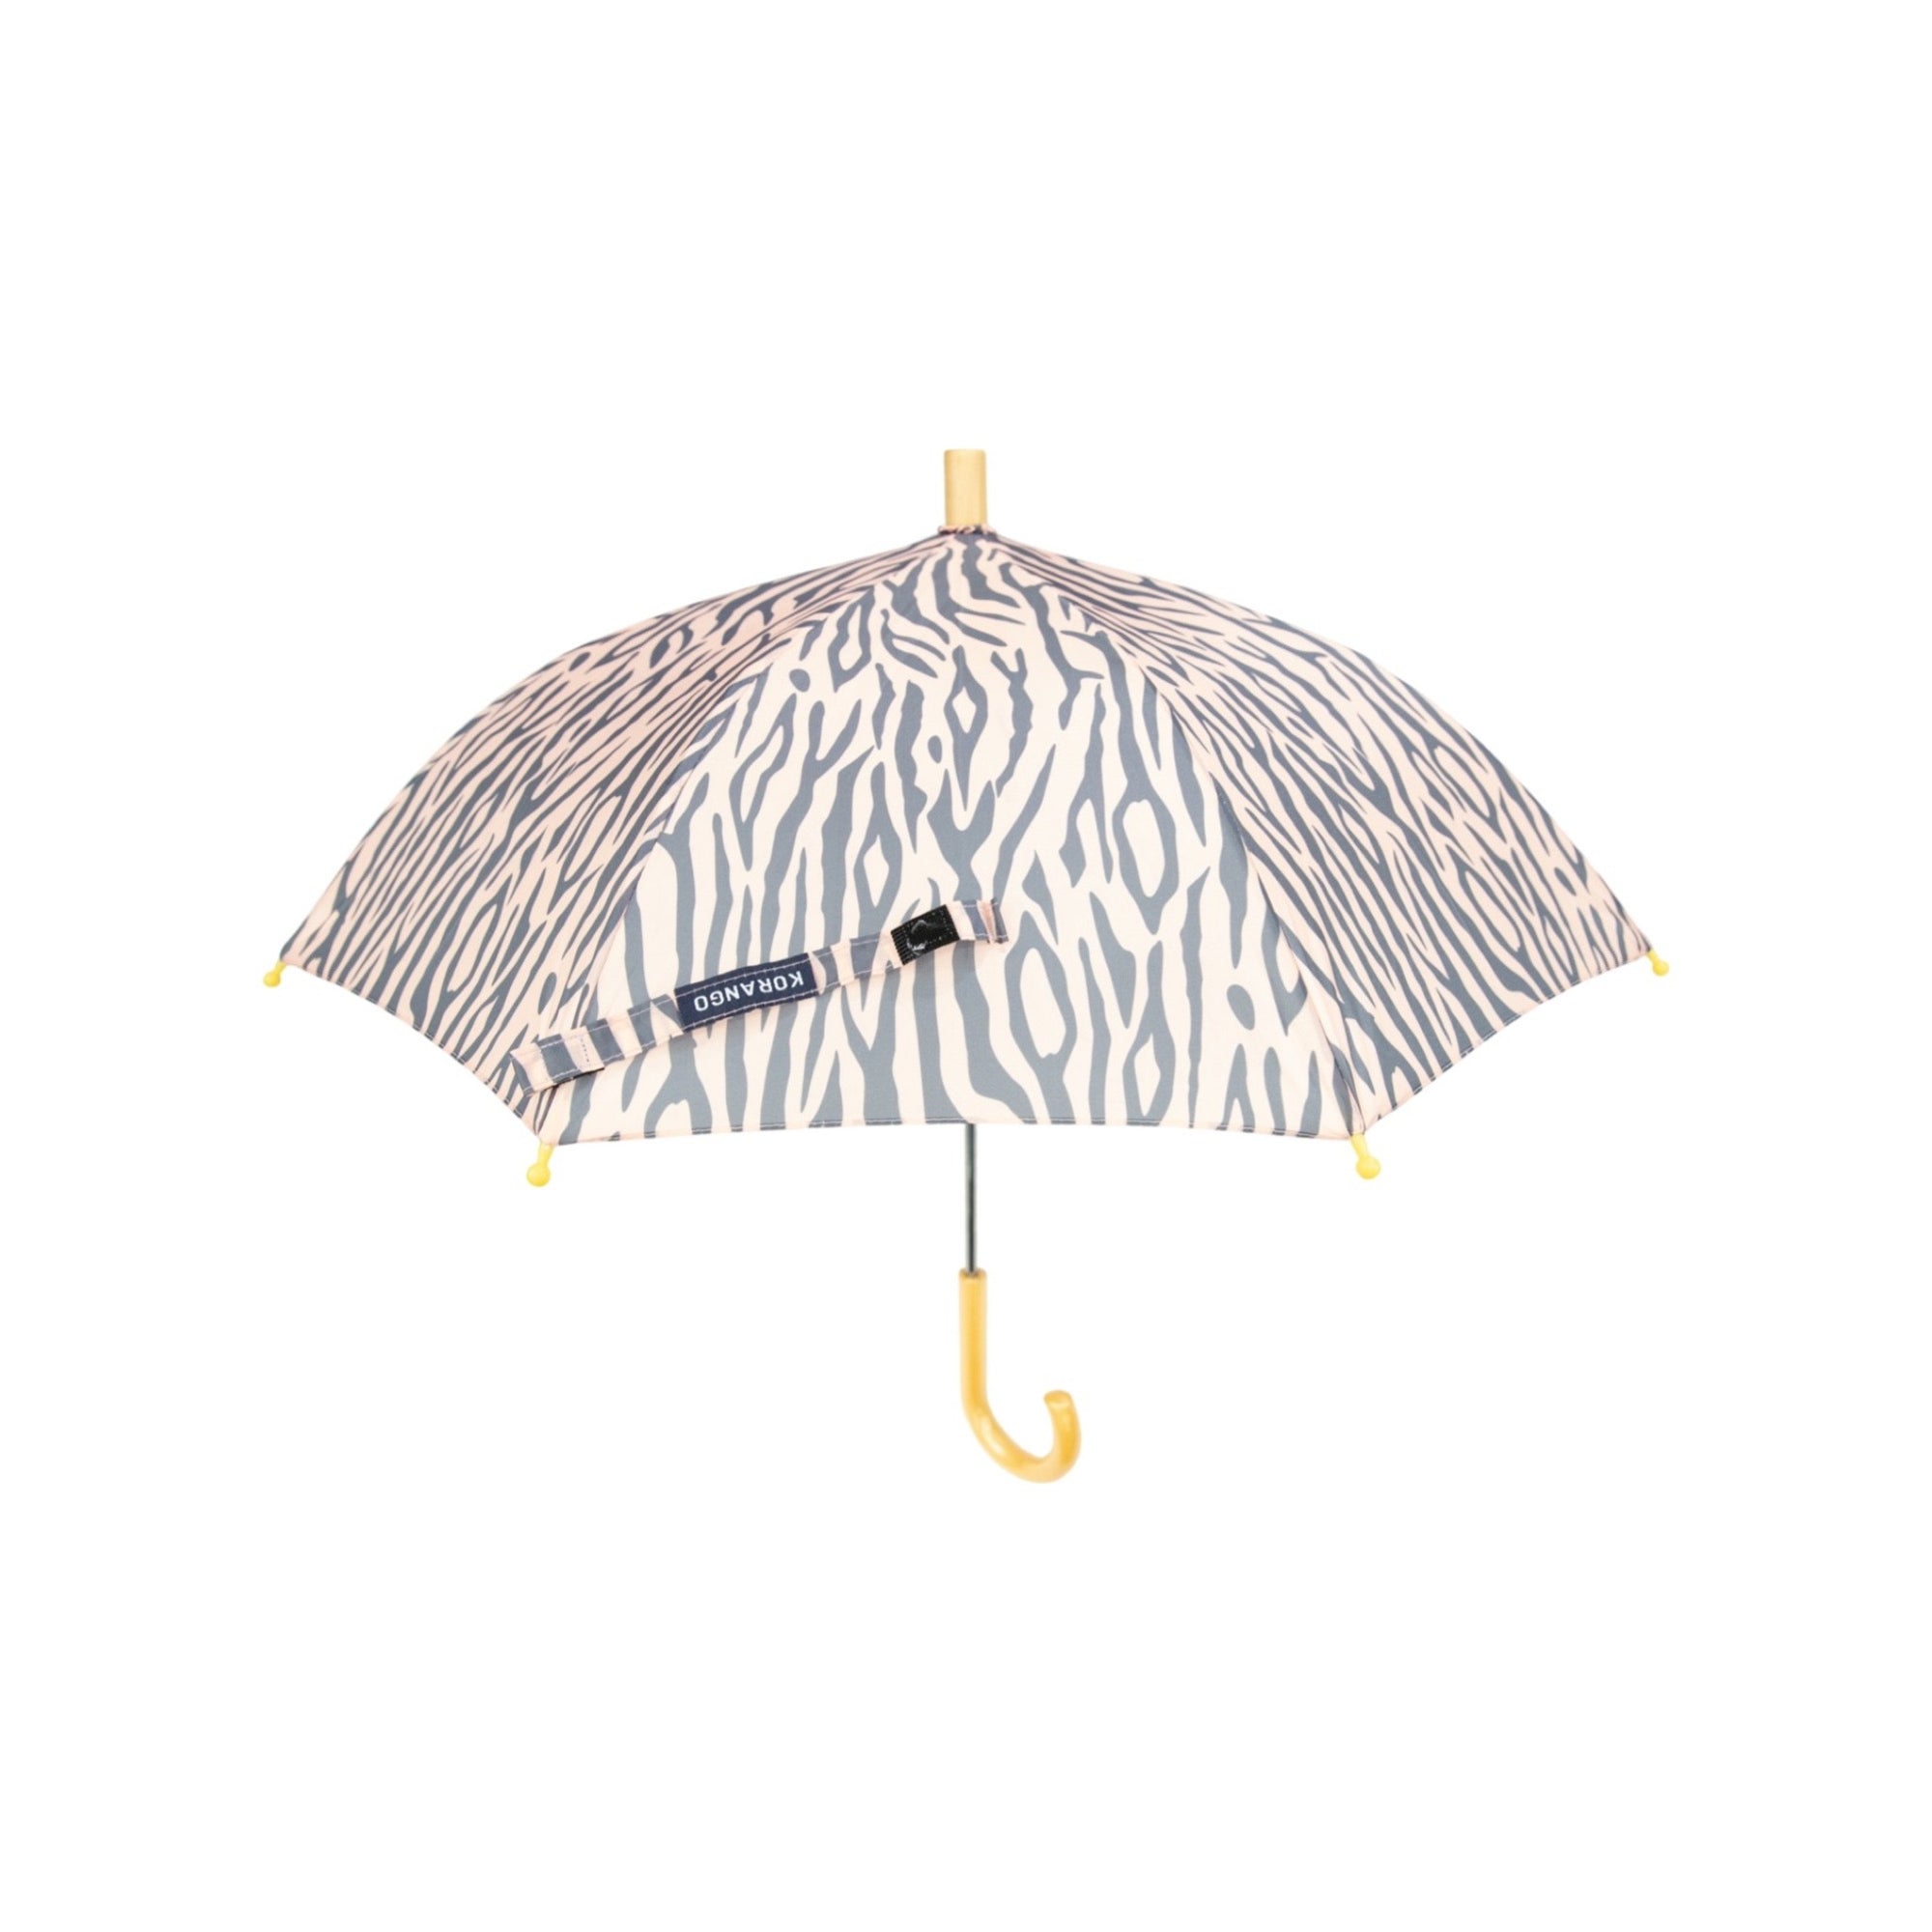 Korango Tiger Striped Pattern Umbrella Dusty Pink